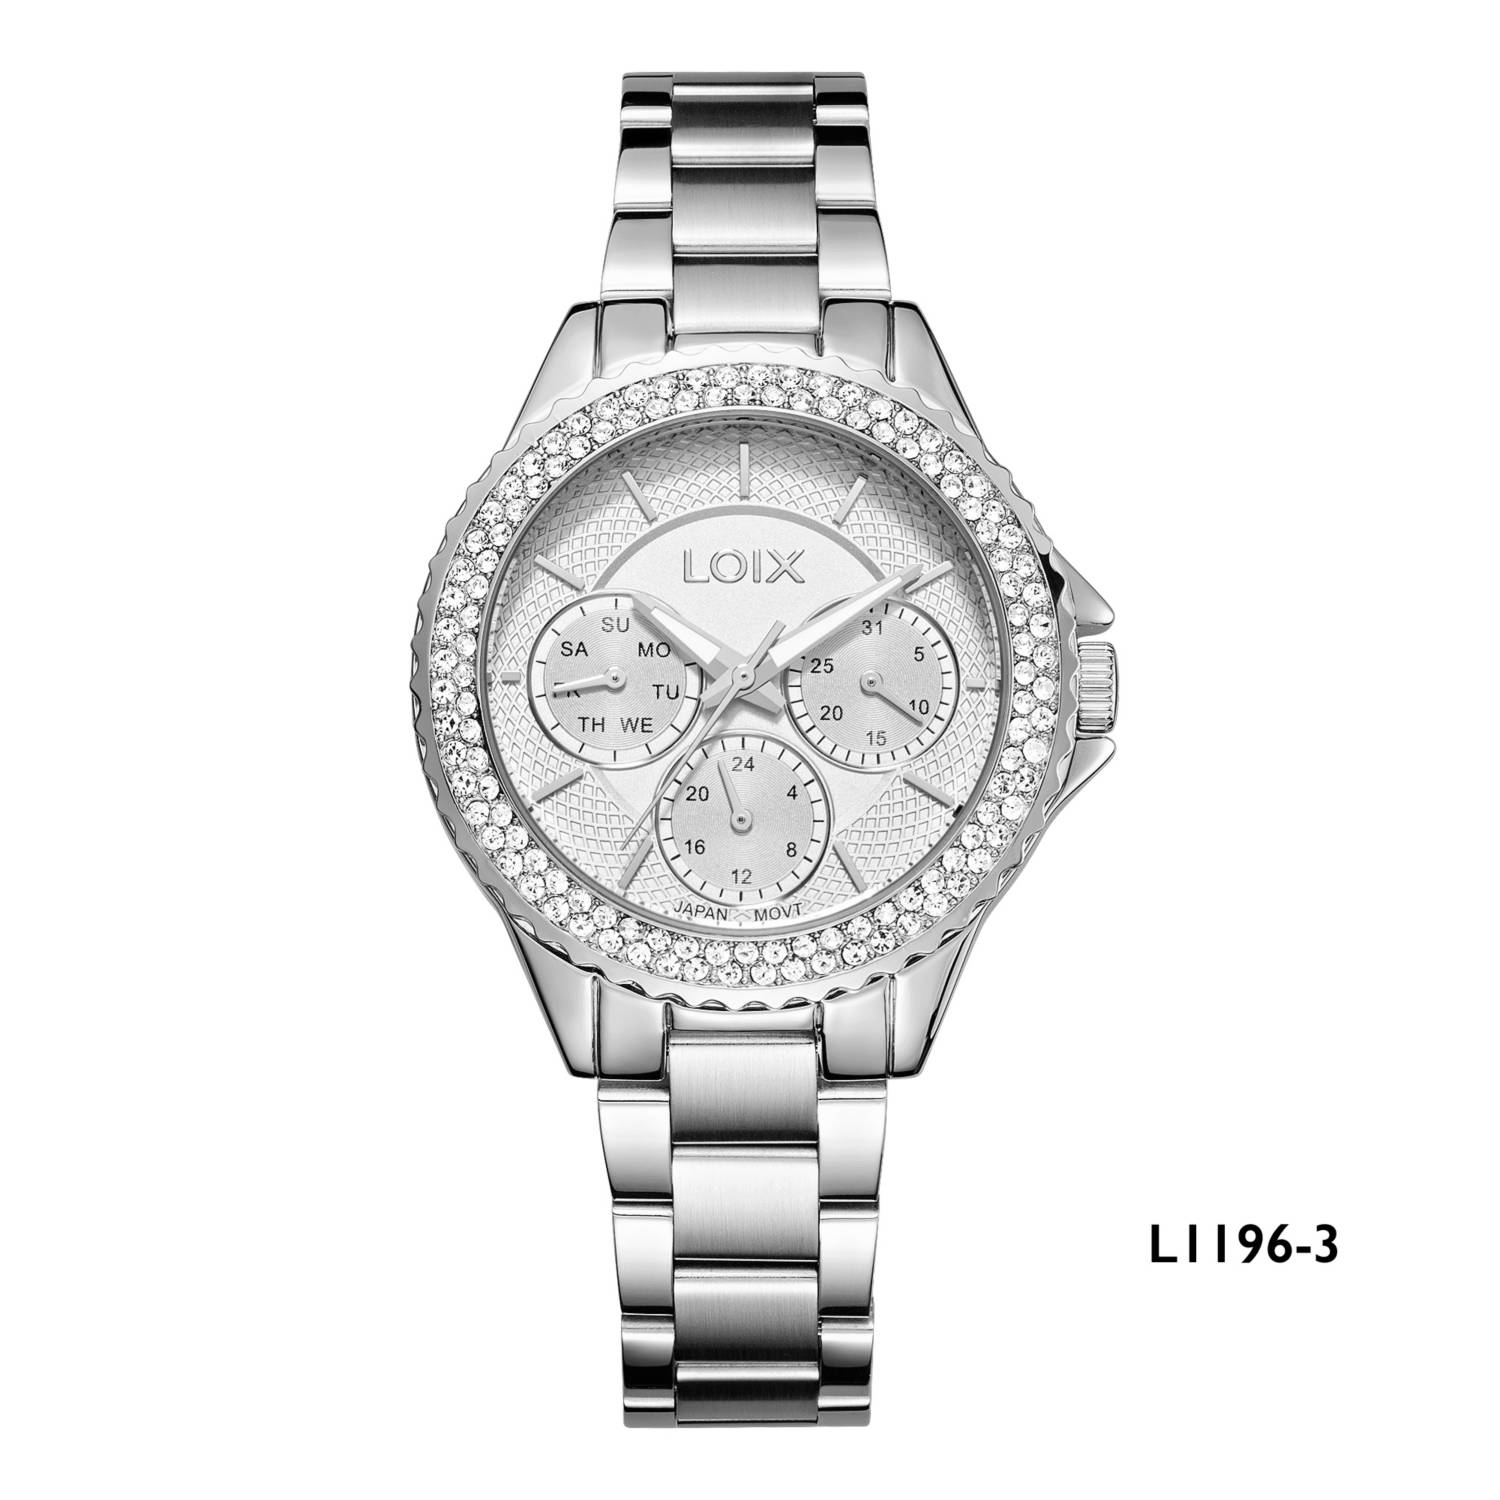 Reloj mujer L1266-3 Dorado con blanco, tablero blanco - Relojes Loix